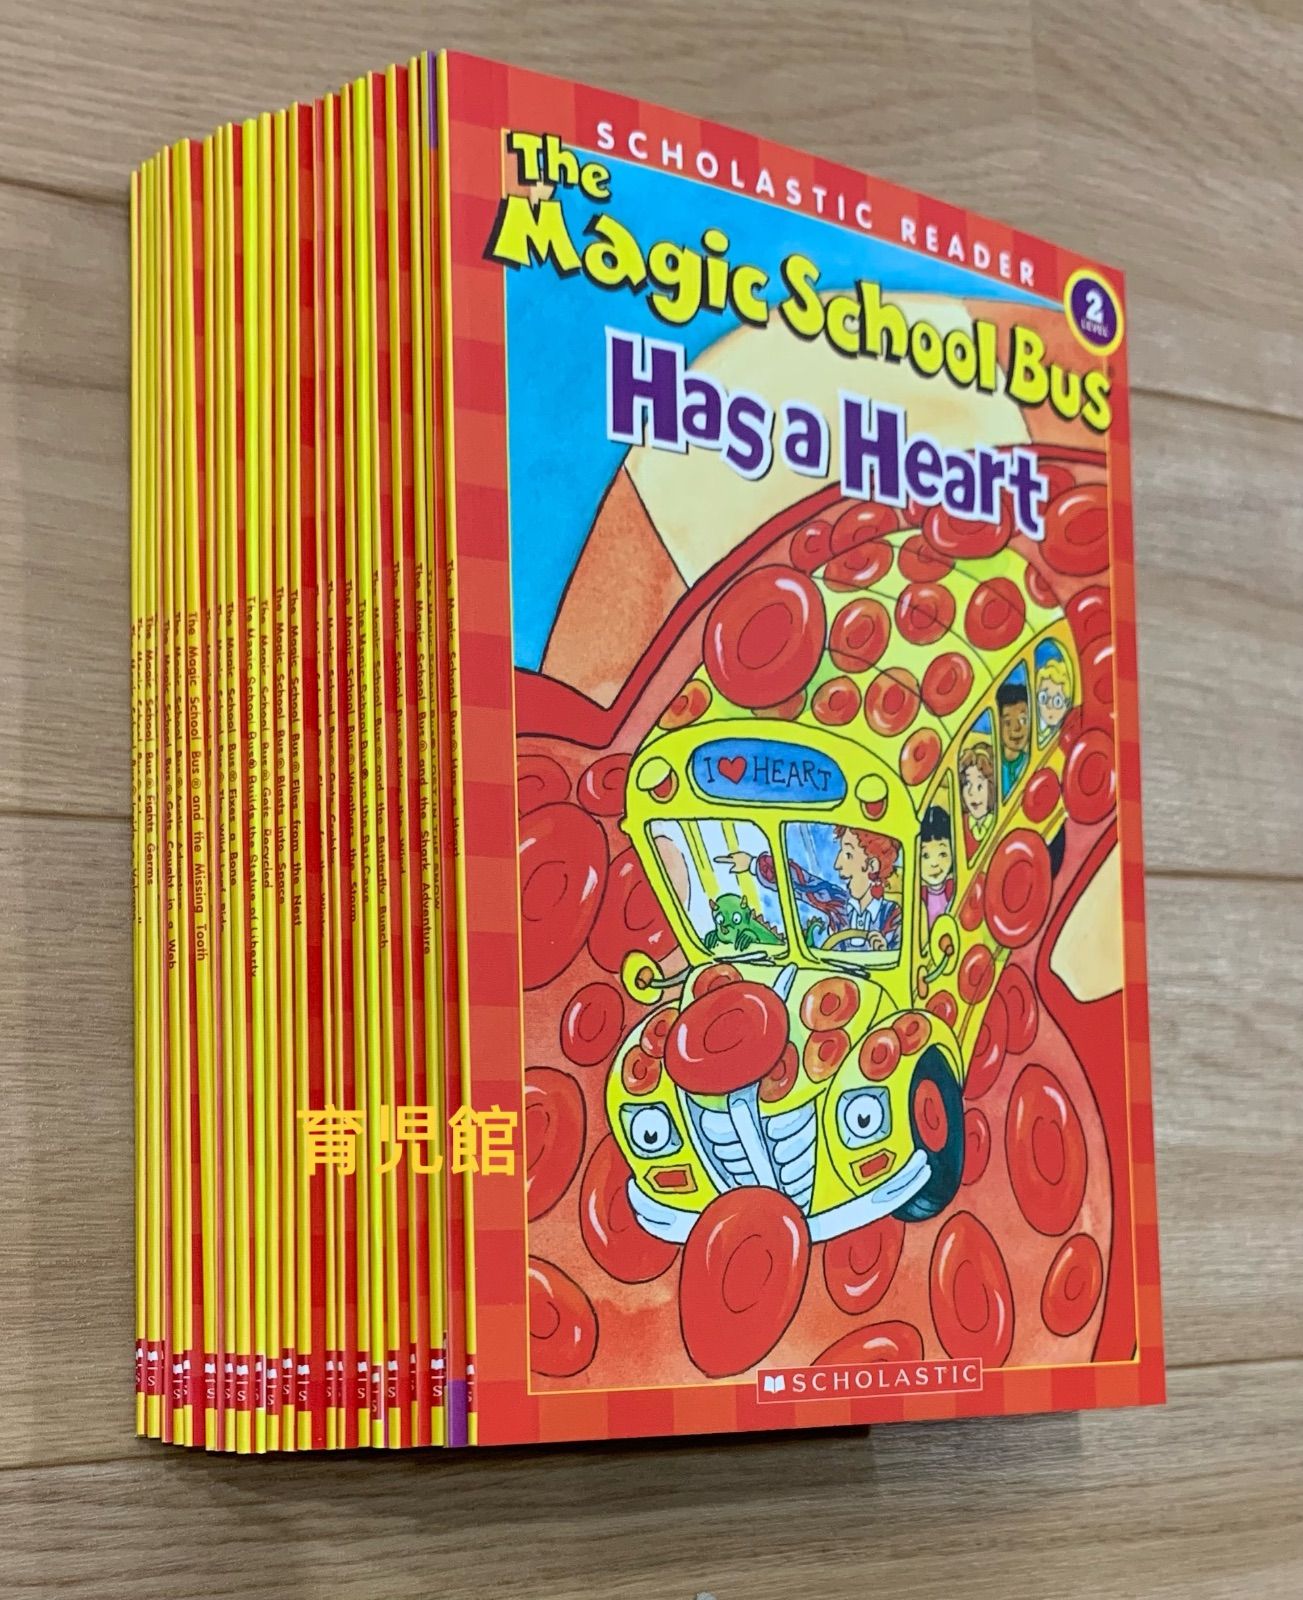 The Magic School Bus 23冊 全冊音源付最新版マイヤペン対応 - メルカリ